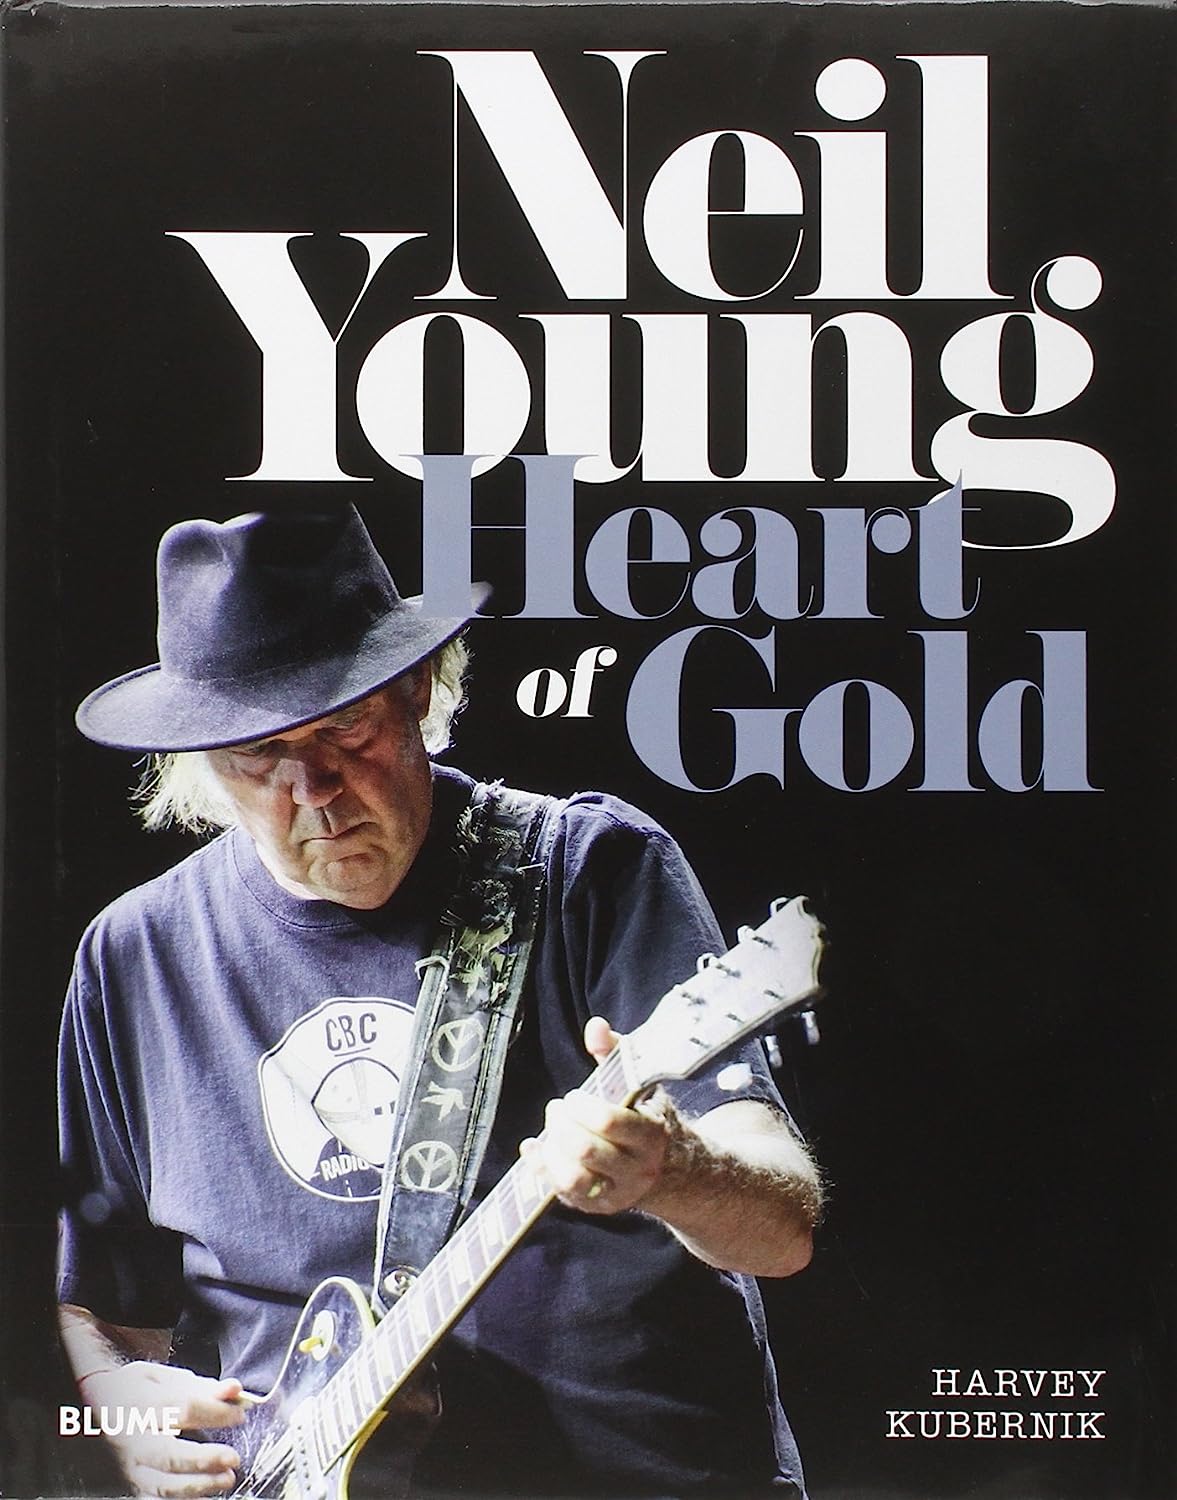 Libro: Neil Young por Harvey Kubernik